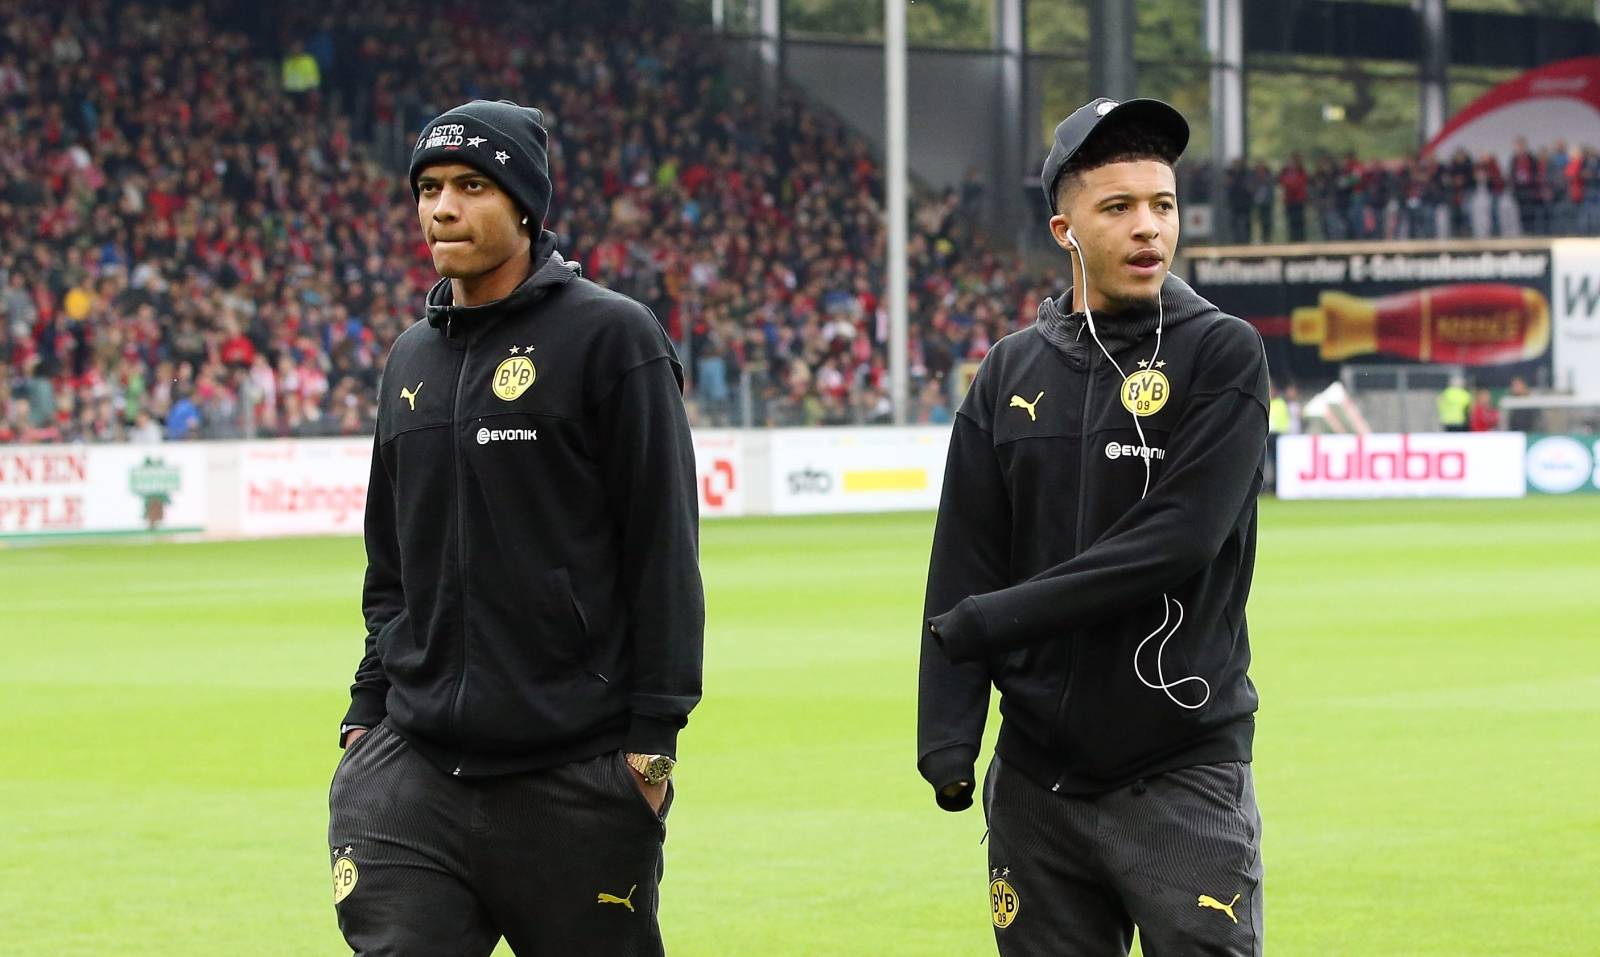 firo: 05.10.2019 Football, Football: 1. Bundesliga SC Freiburg - BVB Borussia Dortmund